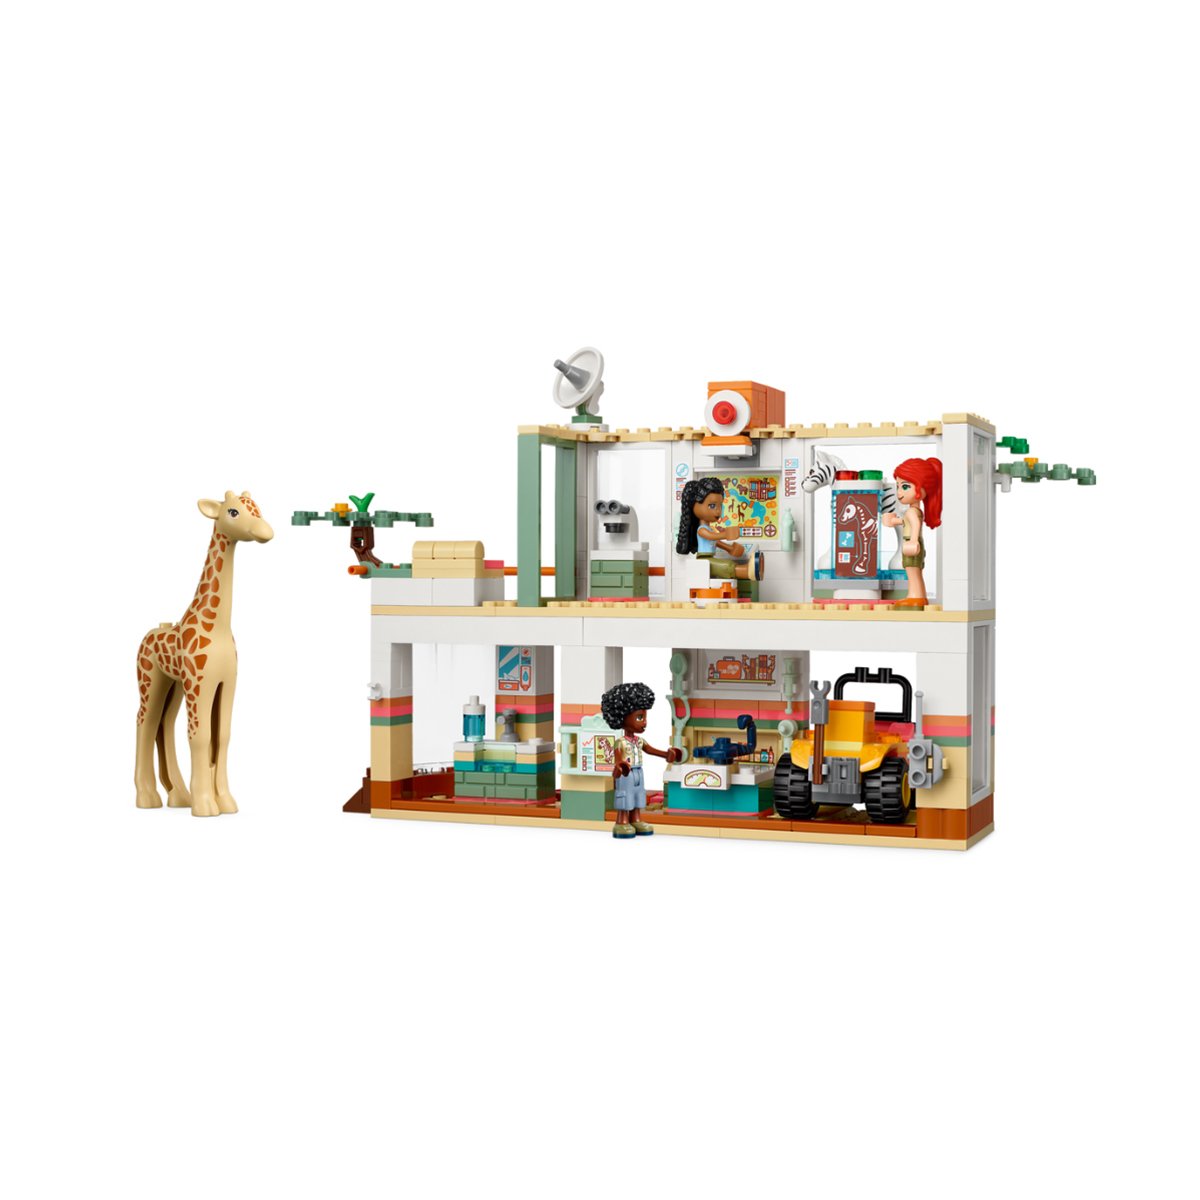 41717 Lego Friends - Mianın Vahşi Hayvan Kurtarma Merkezi, 430 parça +7 yaş